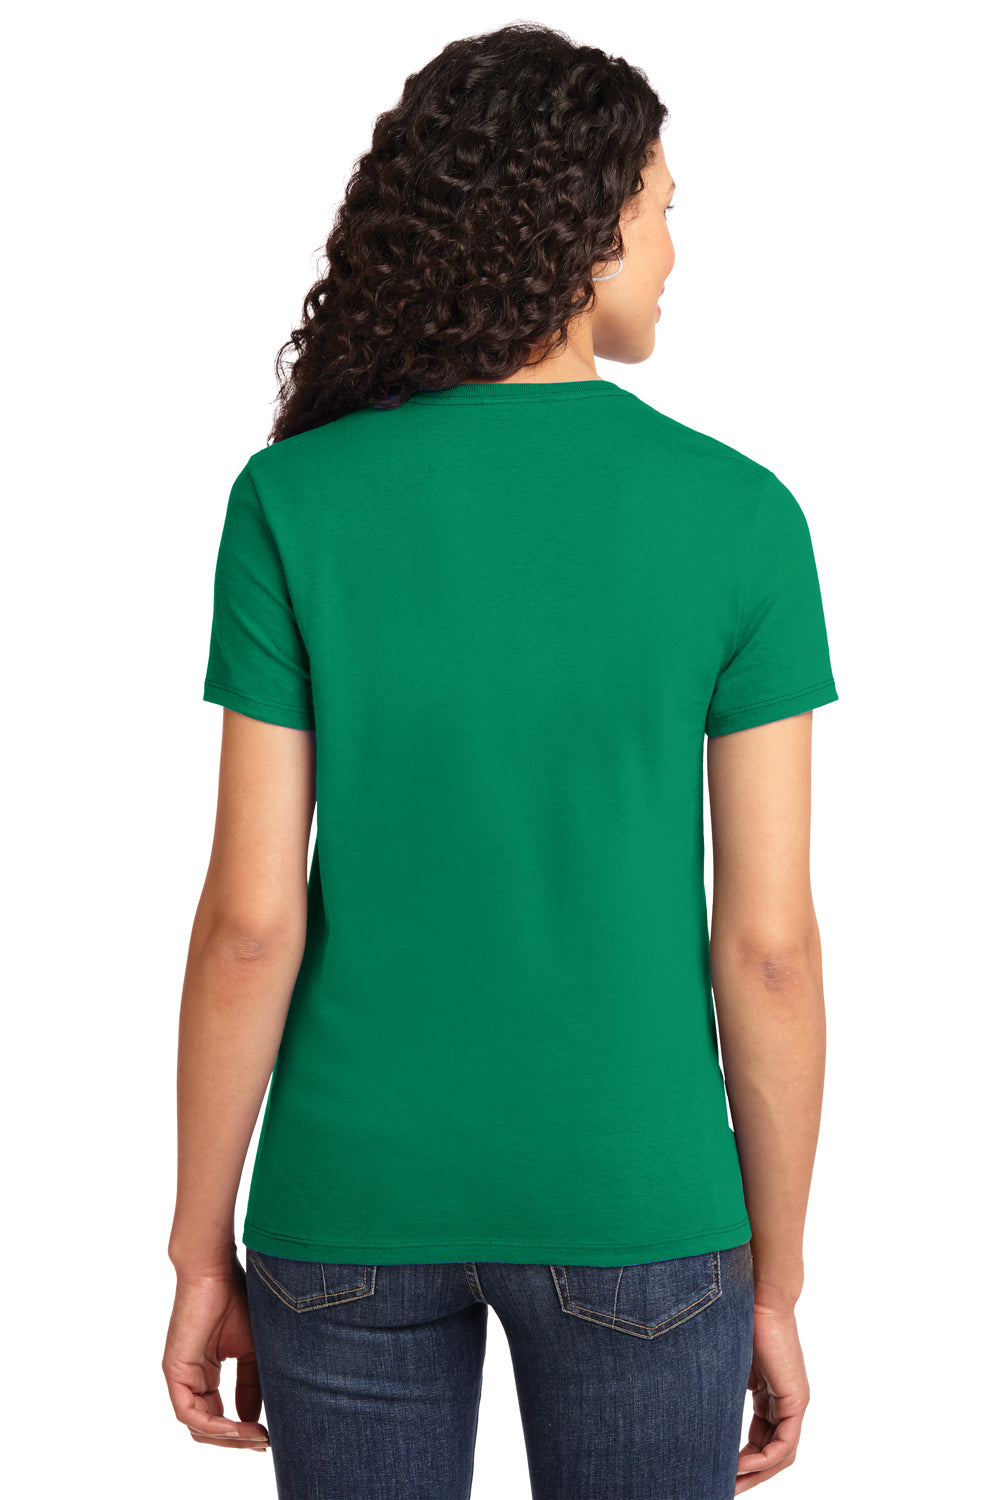 Port & Company LPC61 Womens Essential Short Sleeve Crewneck T-Shirt Kelly Green Back